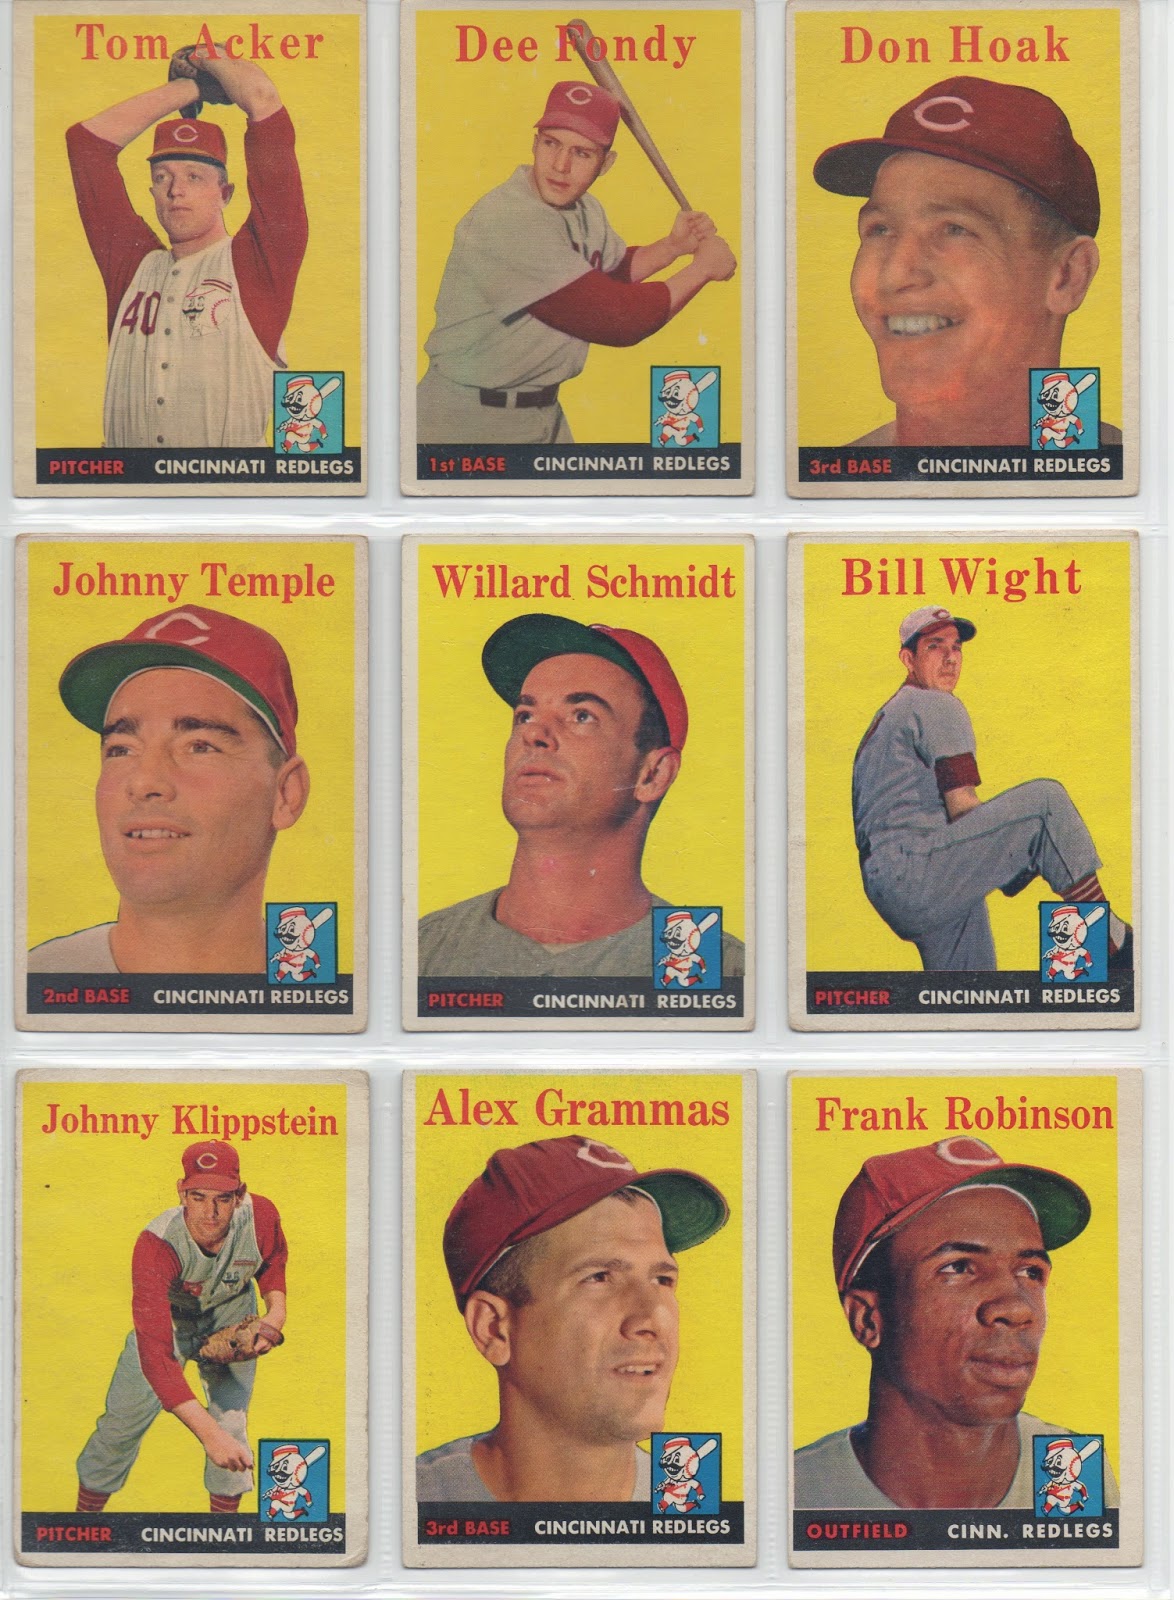 Cincinnati Reds Baseball Card Collector: 1958 Topps Cincinnati Reds Team Set1174 x 1600